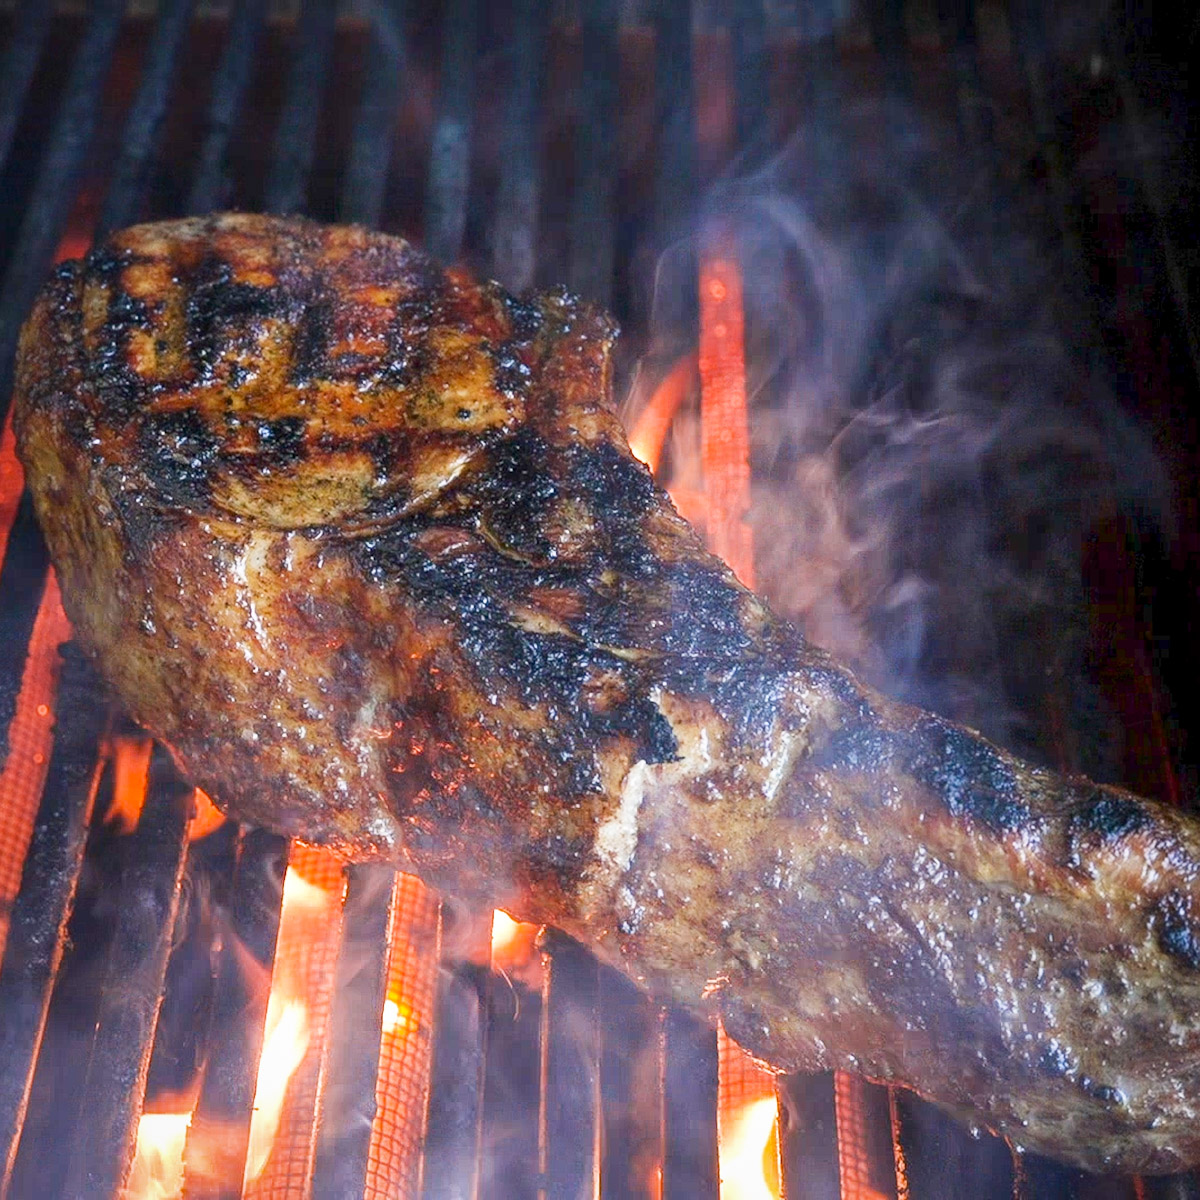 Sear the pork chops on a hot grill.